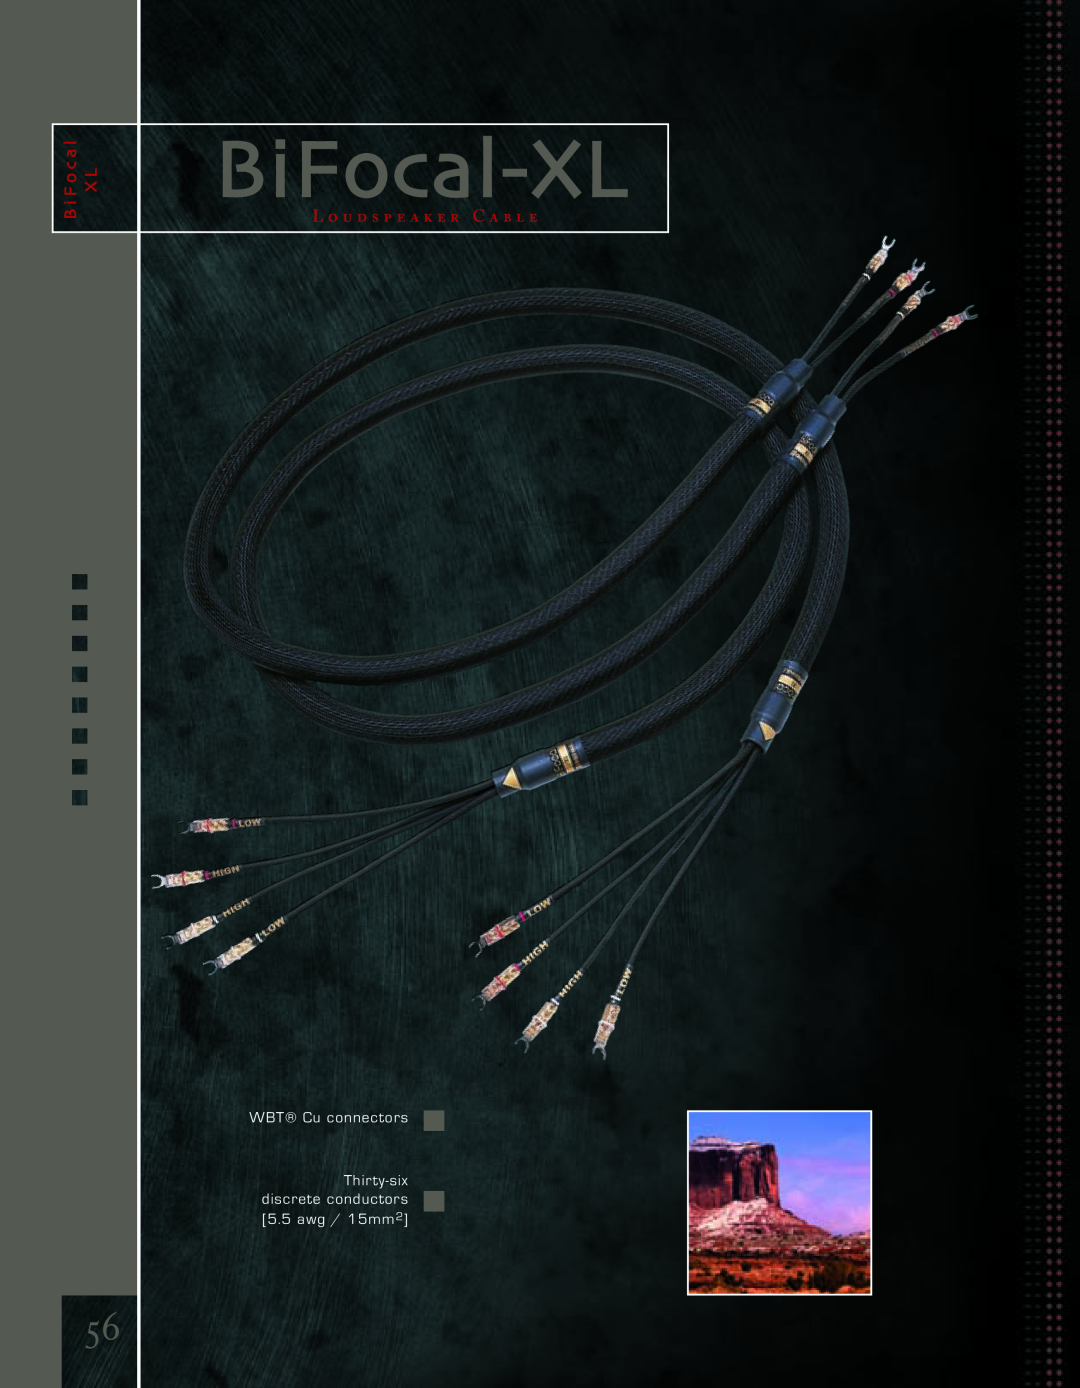 Kimber Kable PowerKordsTM manual BiFocal-XL, B i F o c a l X L, L o u d s p e a k e r C a b l e, WBT Cu connectors 